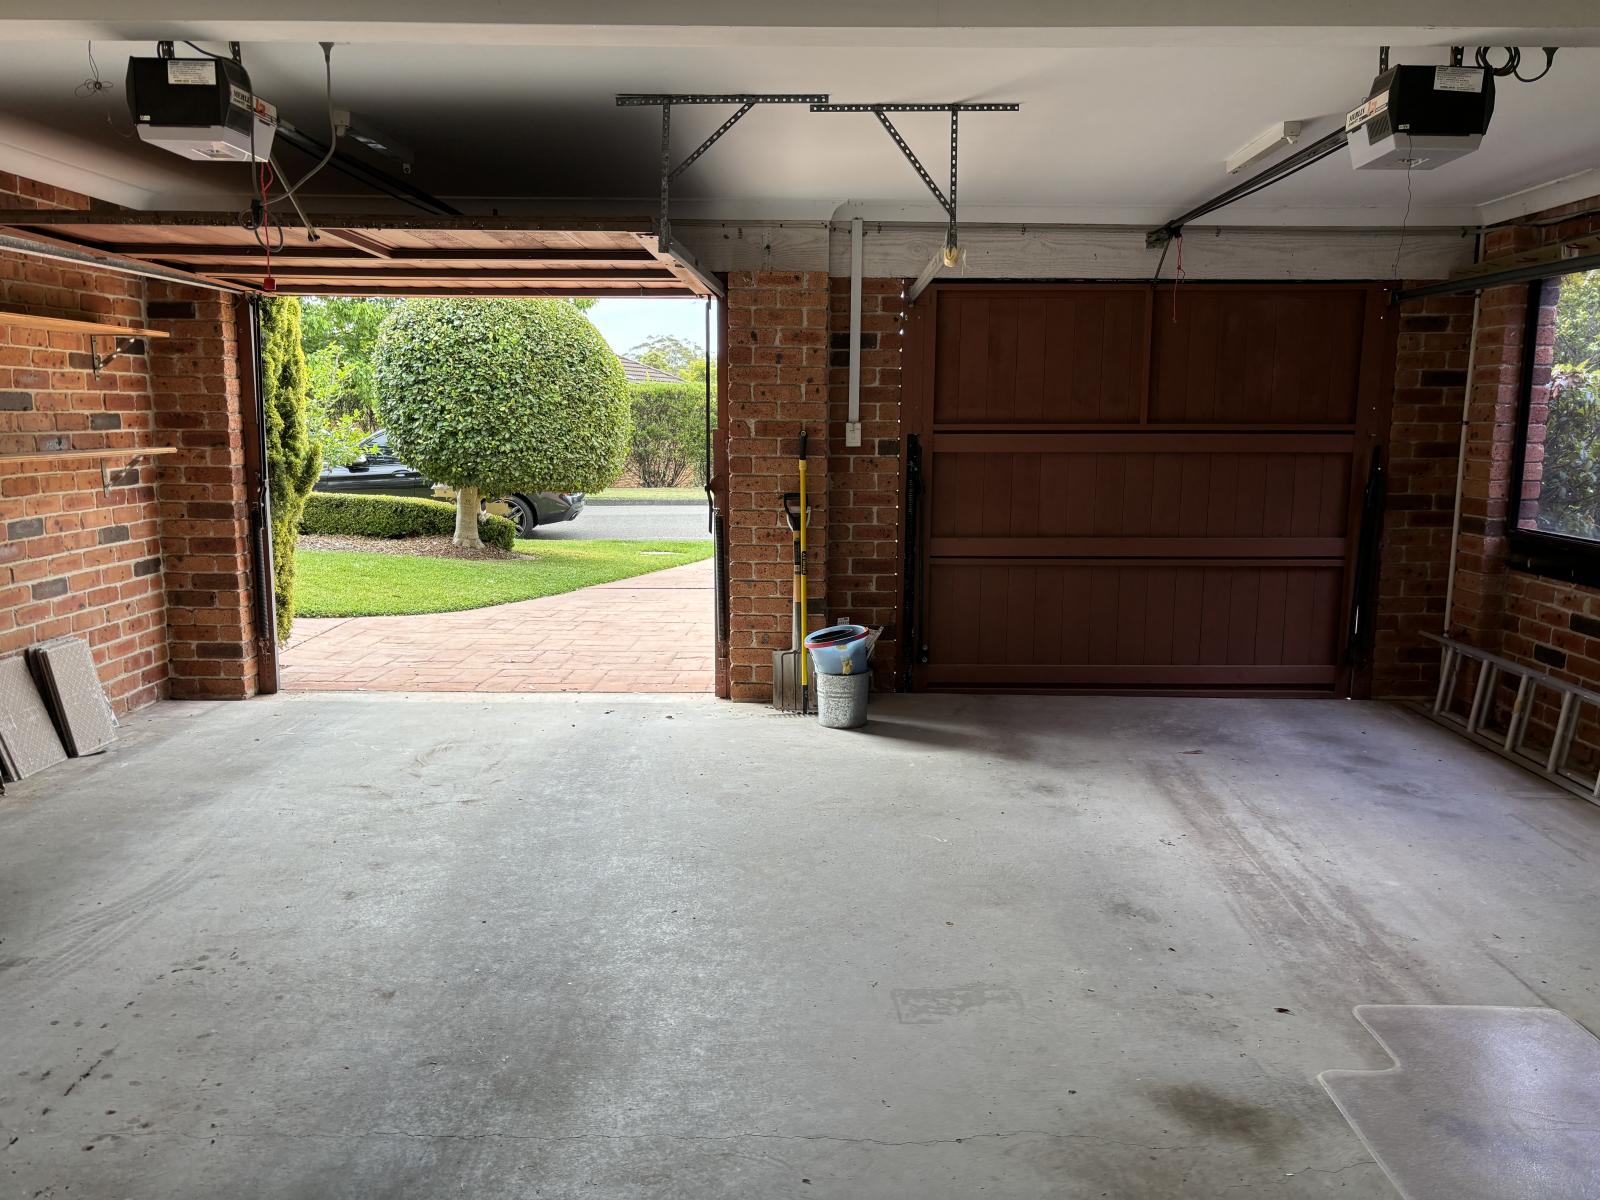 Garage Door Centre Pillar is 2 different levels